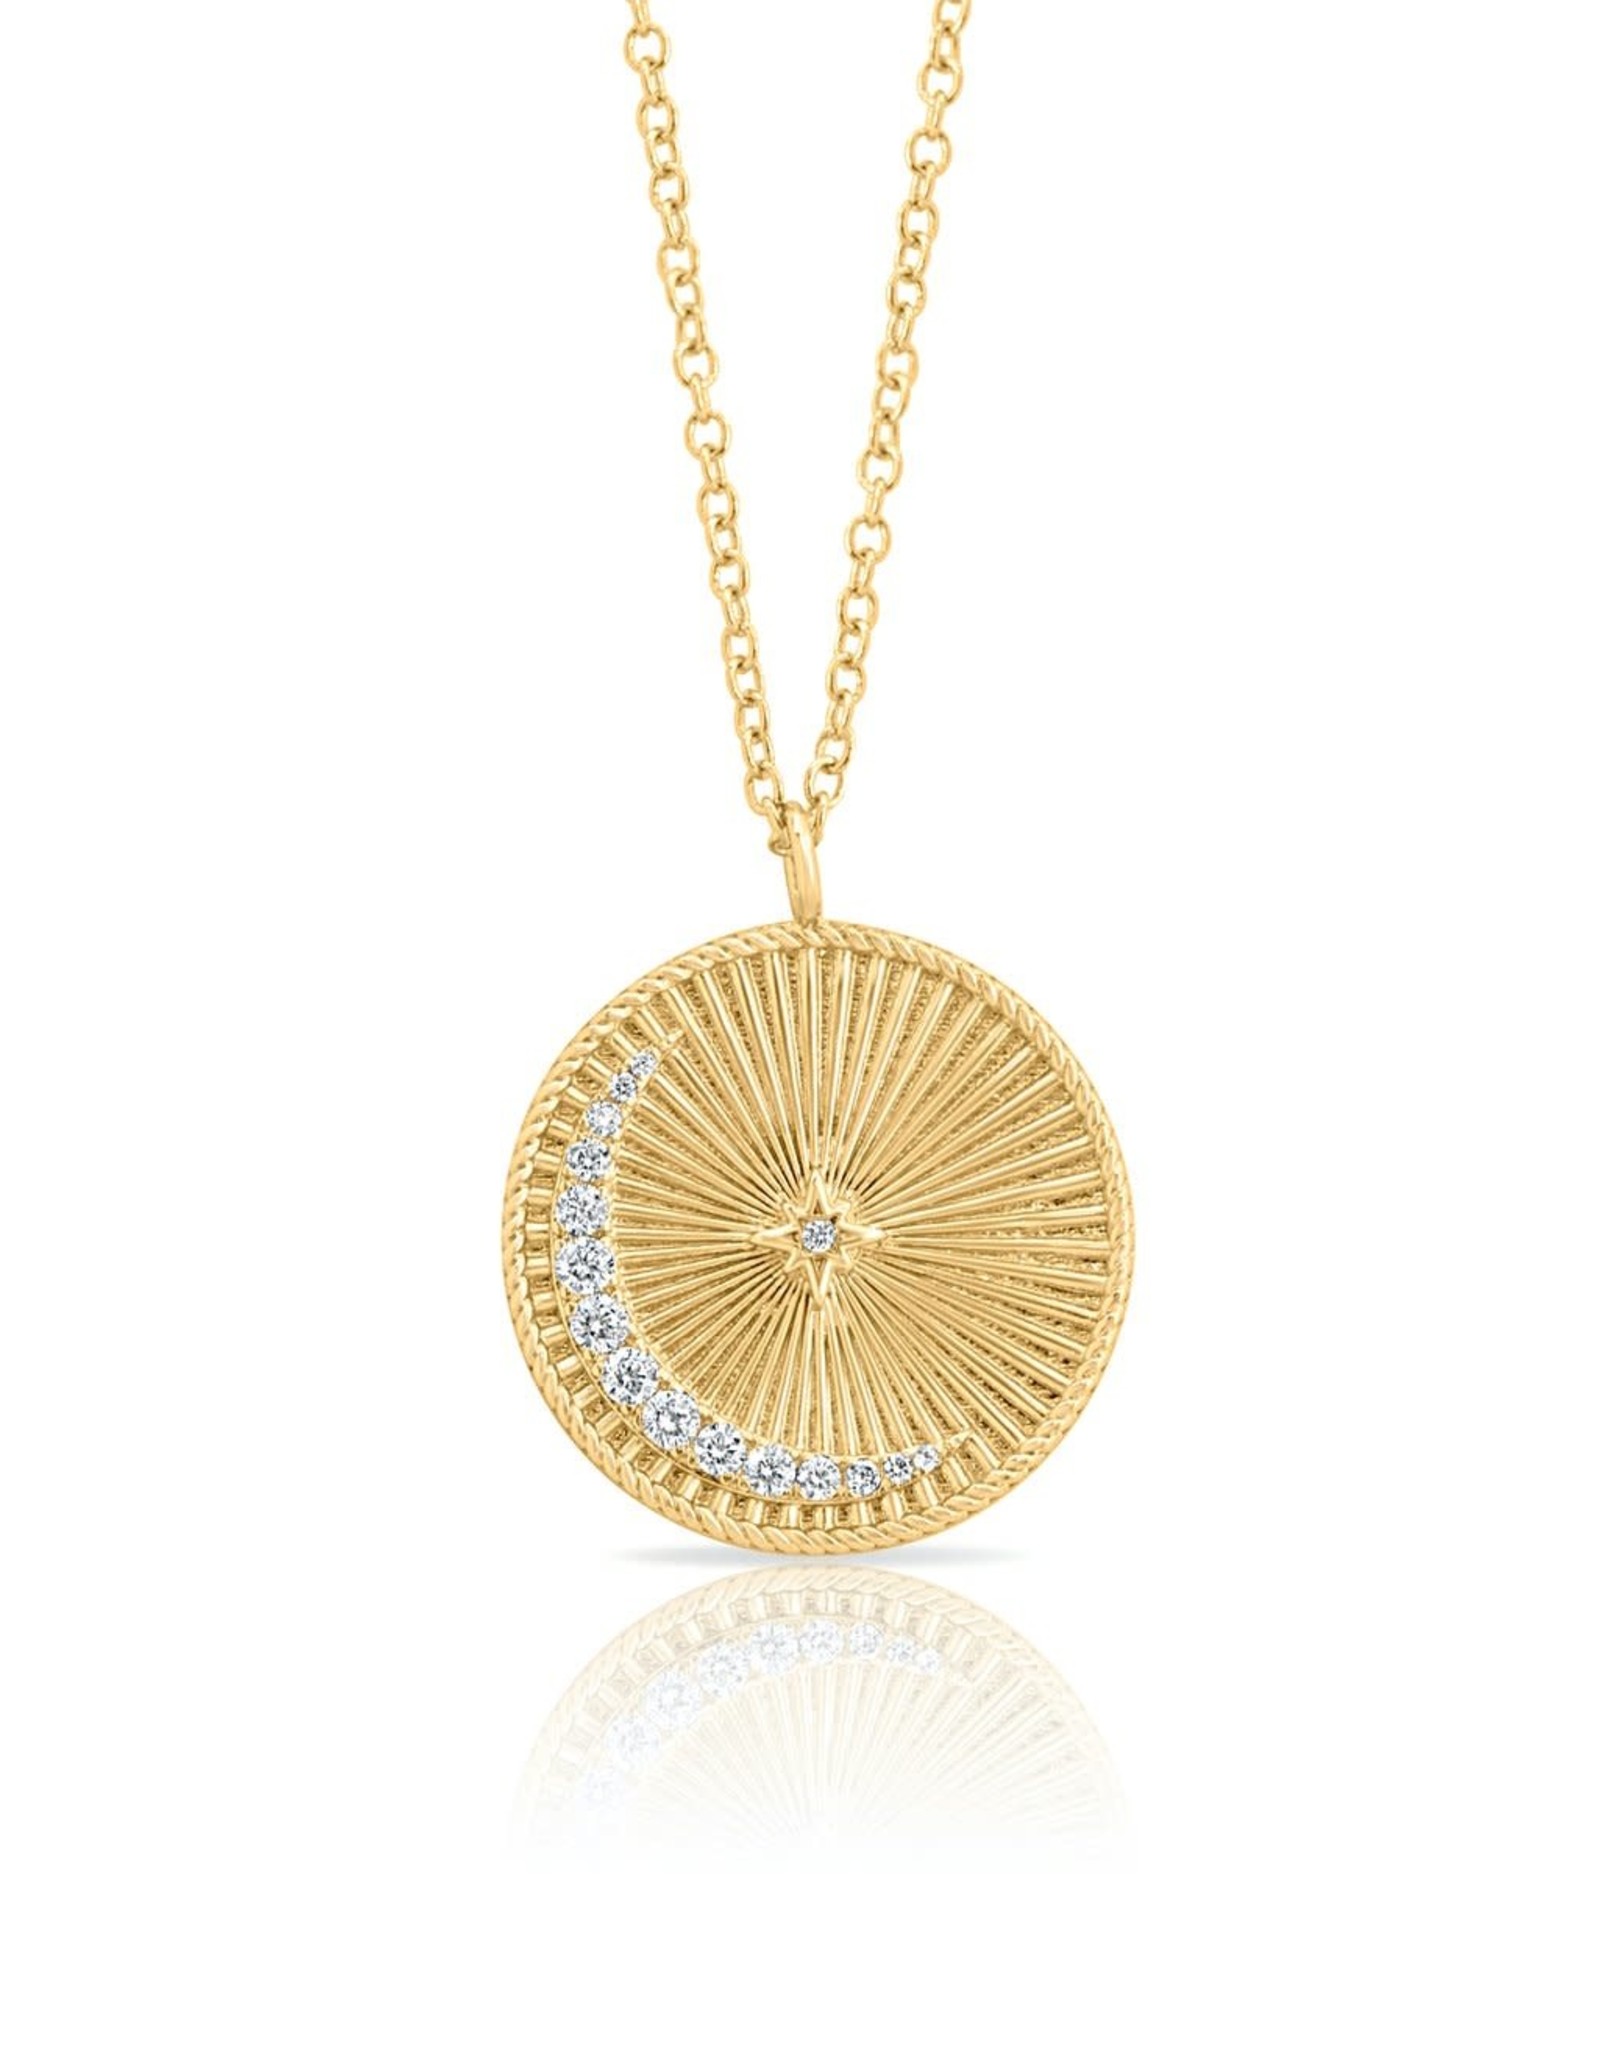 Elizabeth Stone Elizabeth Stone Celestial Coin Necklace